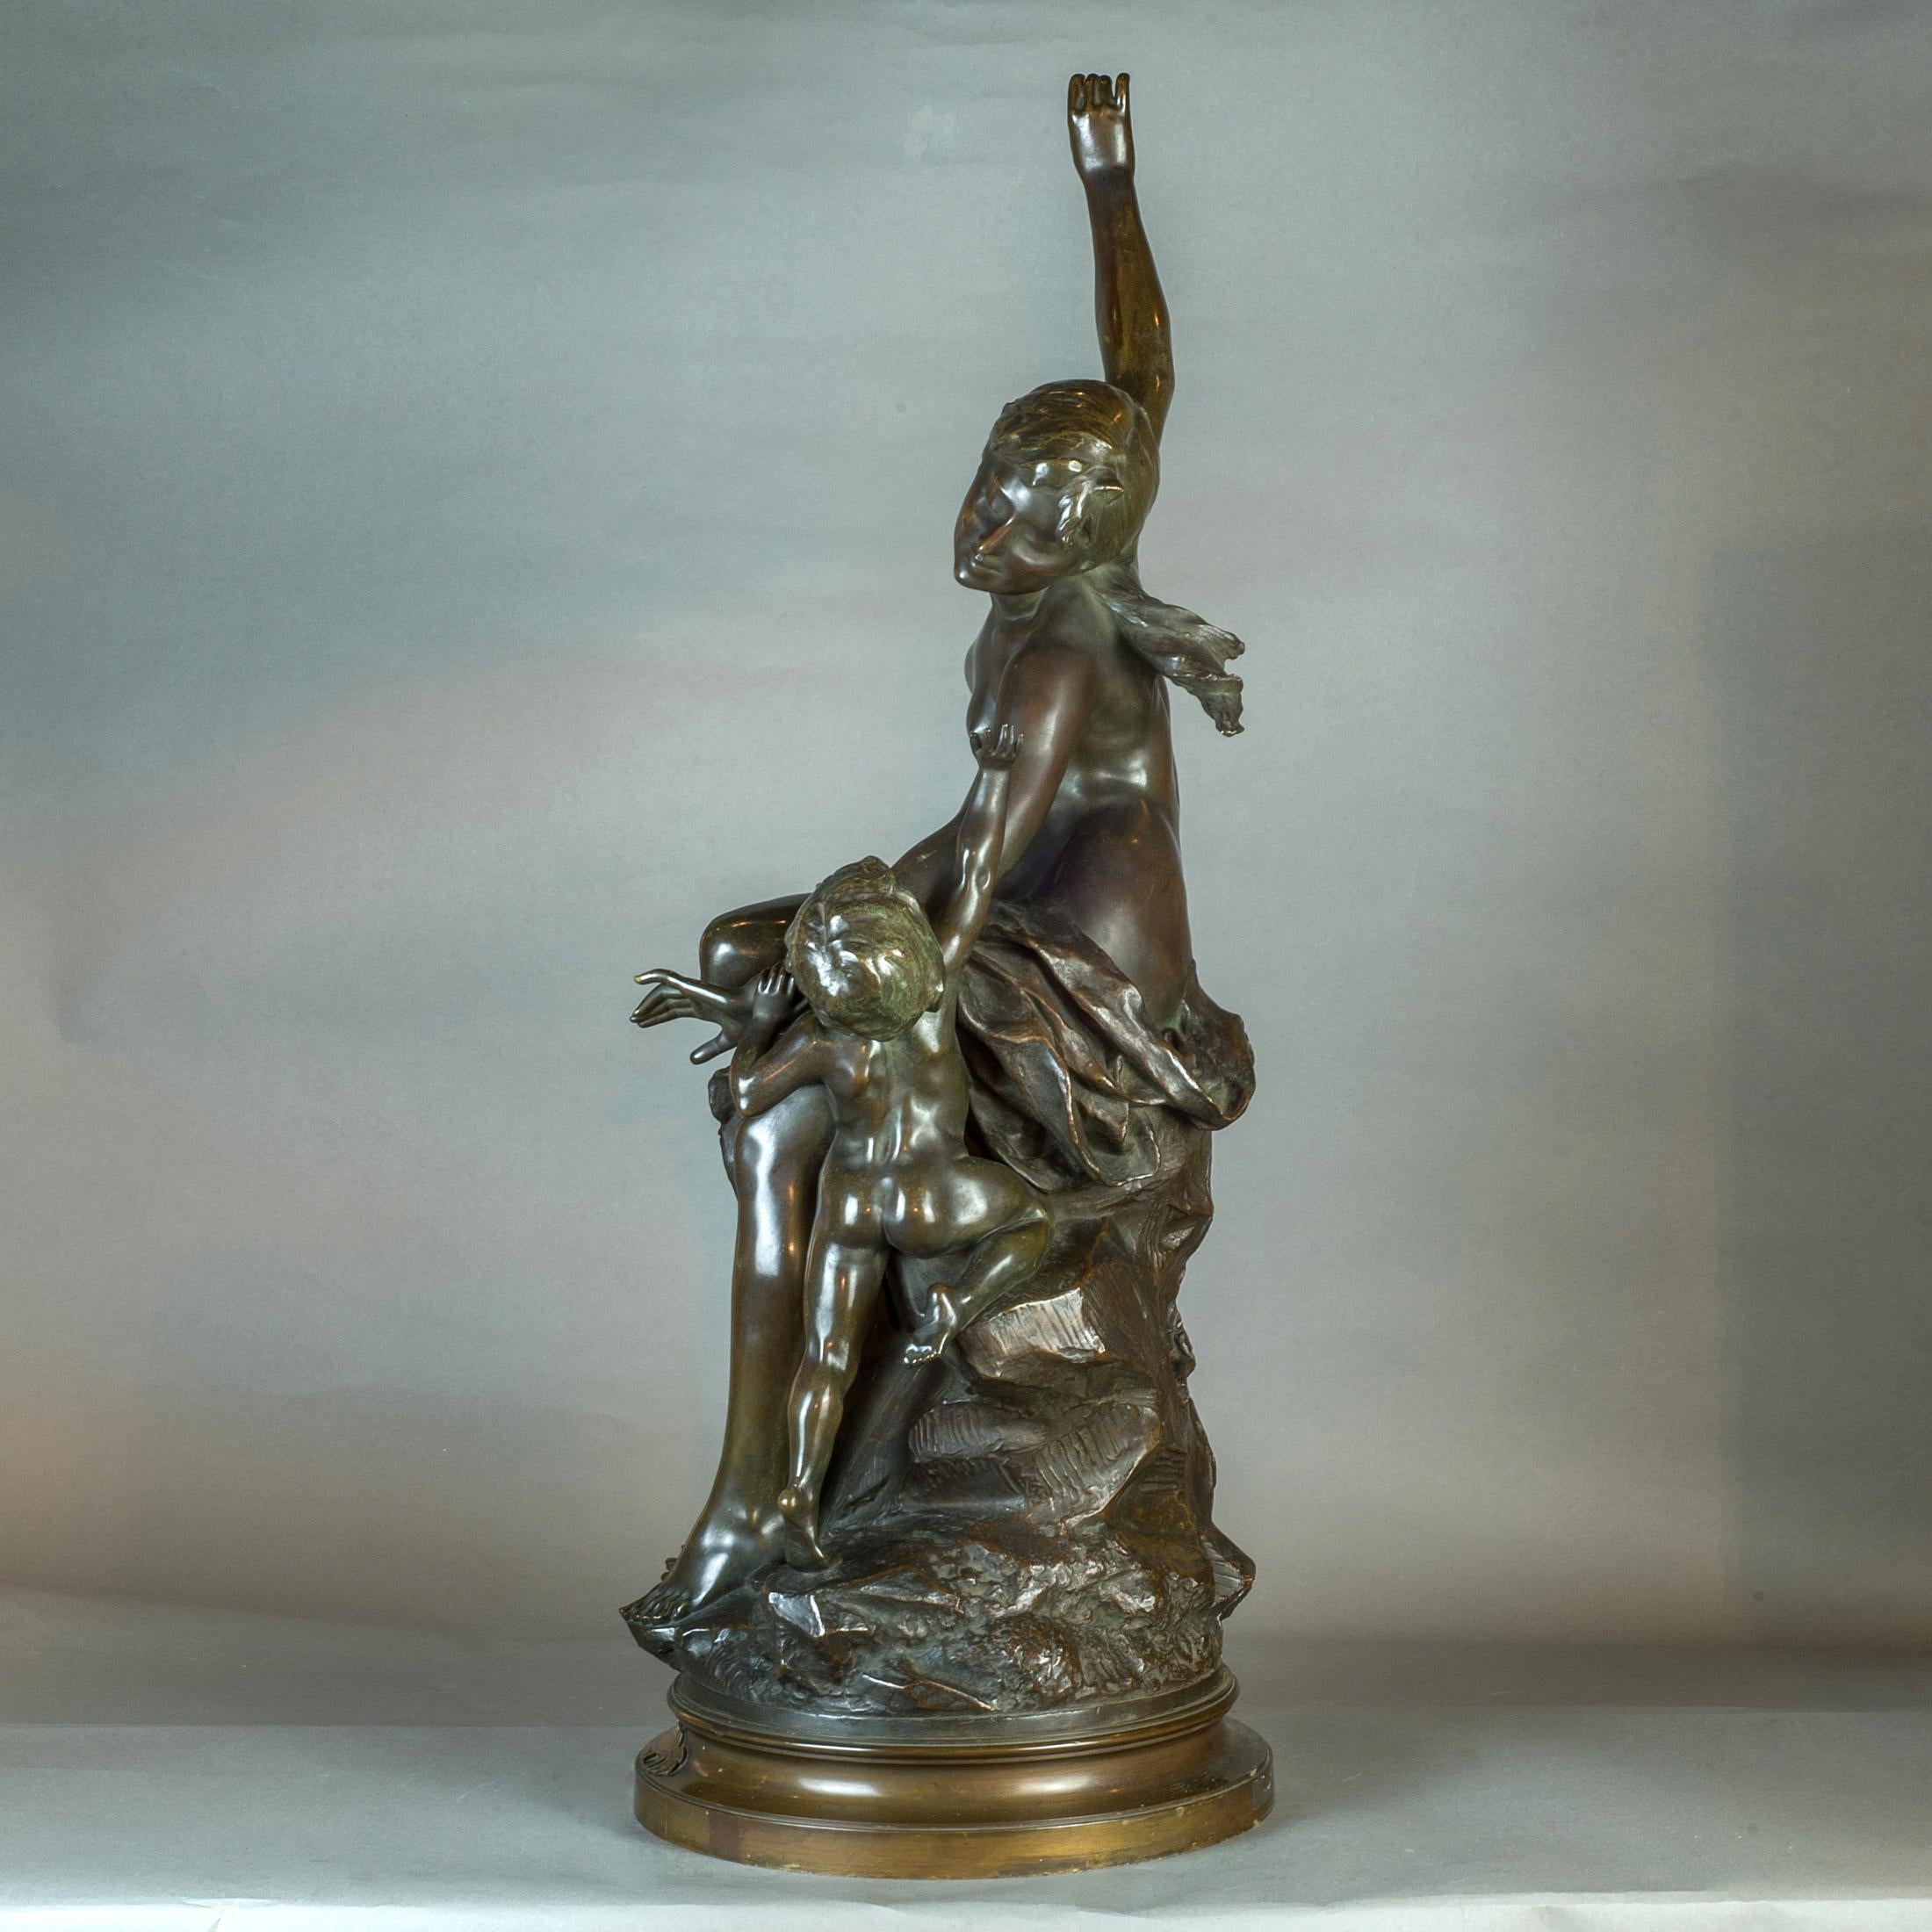 French Bronze Sculpture Statue by Alexandre Dercheu - Gold Figurative Sculpture by Jules-Alfred-Alexandre Dercheu